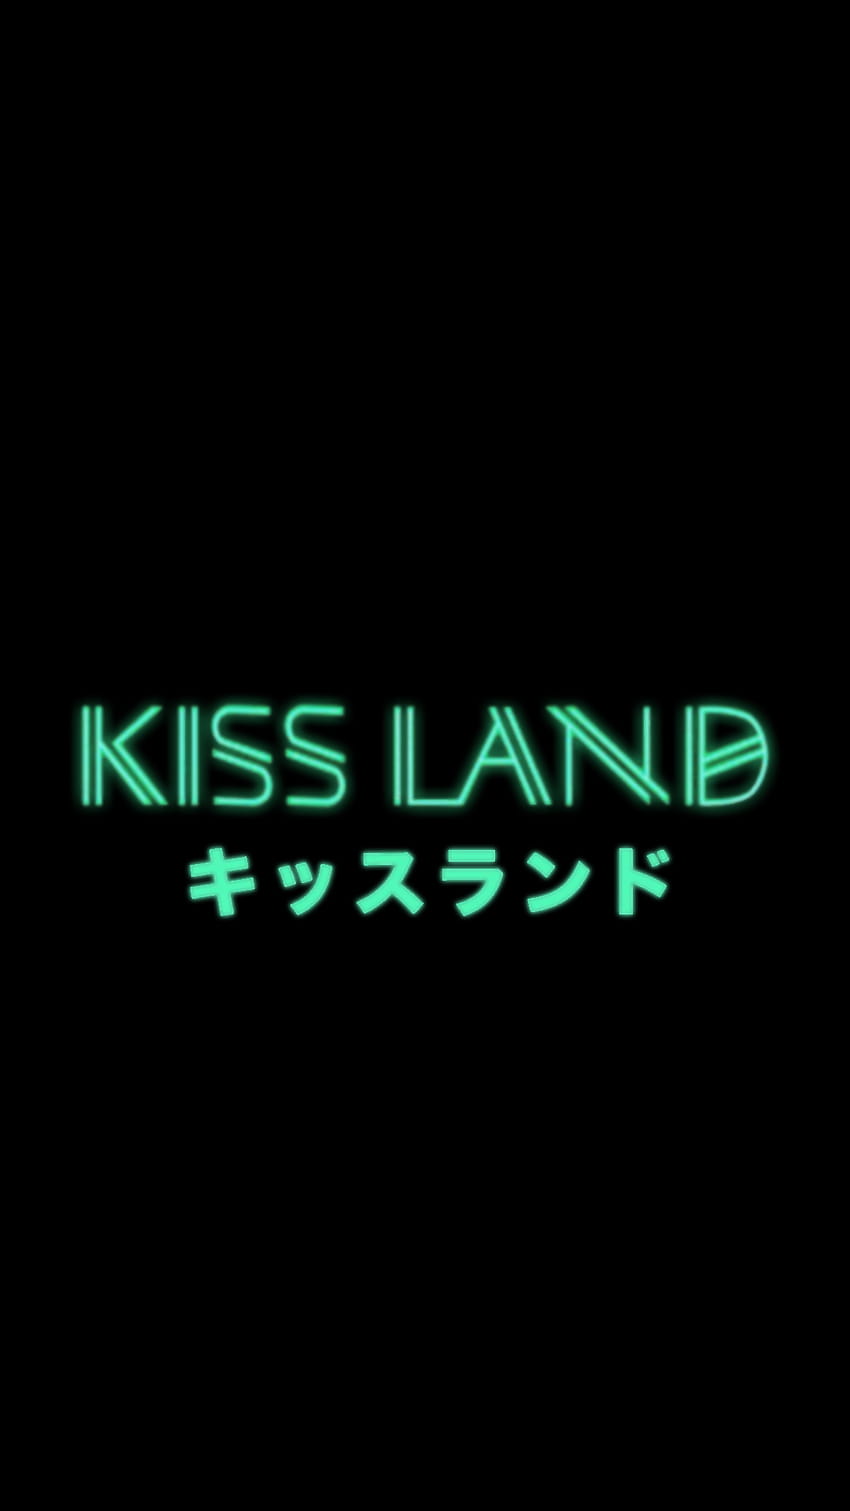 The Weeknd Kiss Land HD phone wallpaper